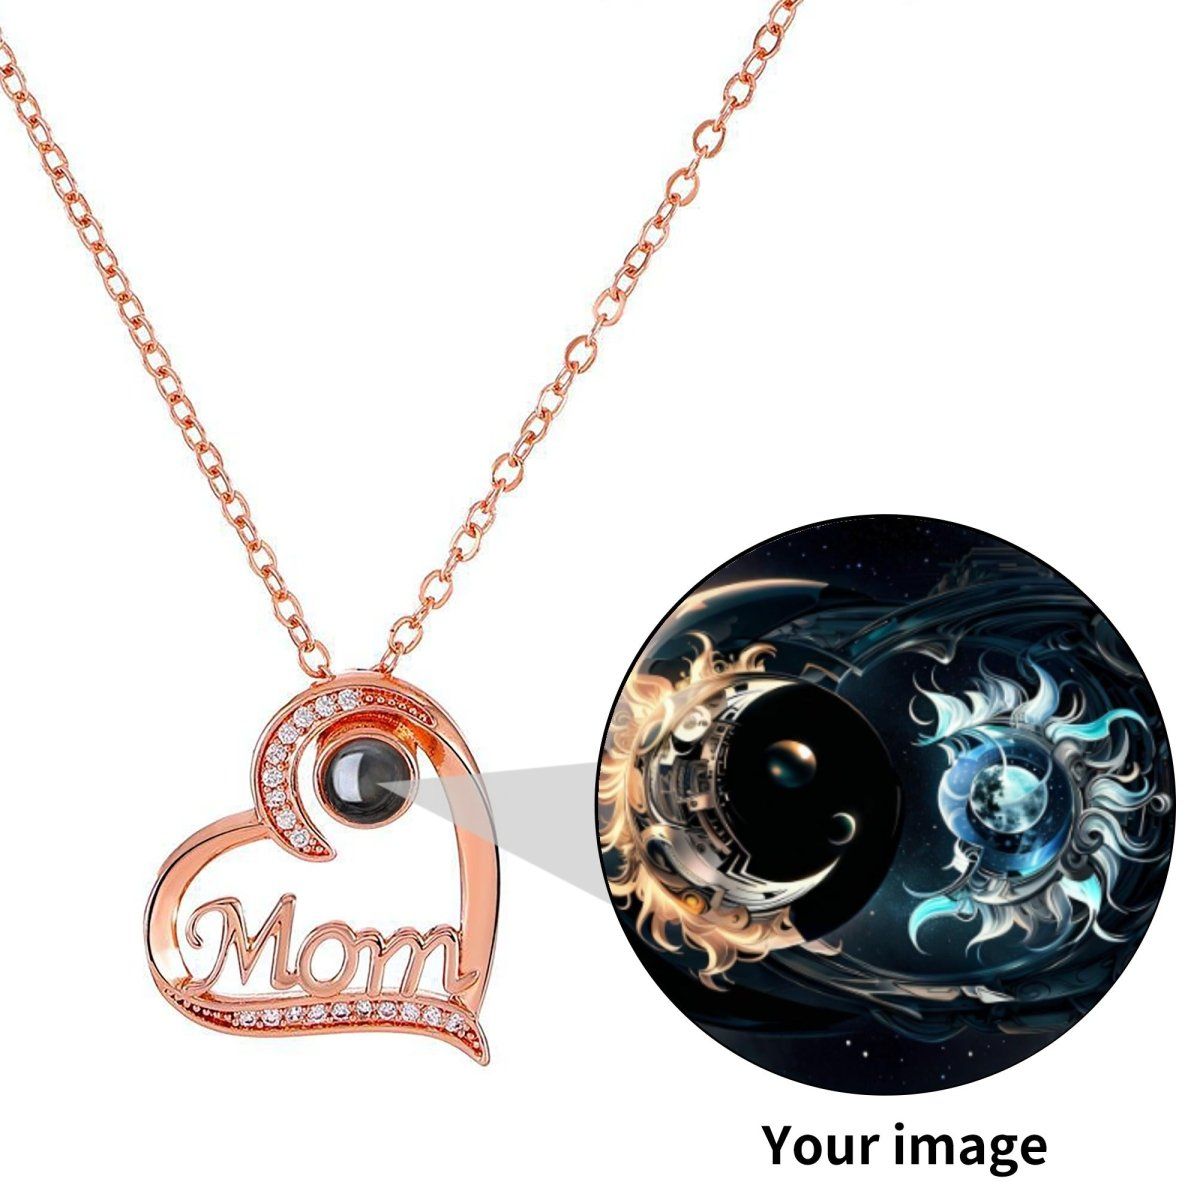 Personalized Photo Necklace Heart - Iron Phoenix GHG